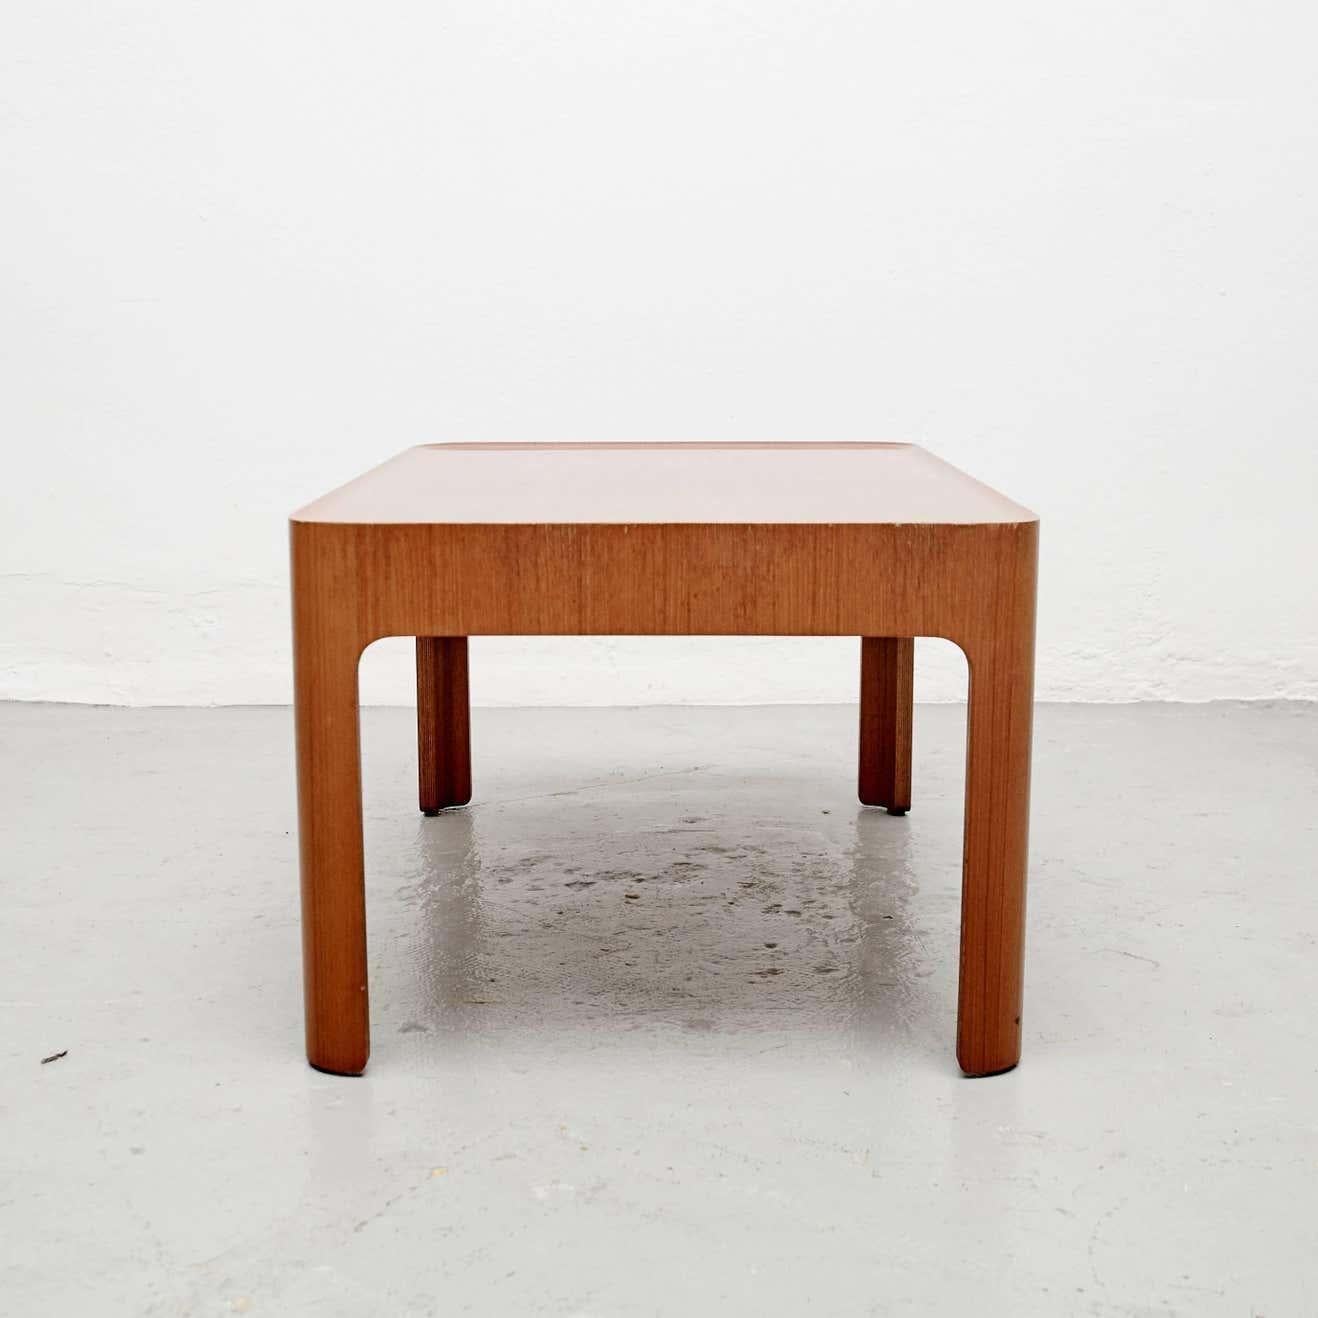 Japanese Isamu Kenmochi Mid-Century Modern Wood Coffee Table, Tendo, 1967 For Sale